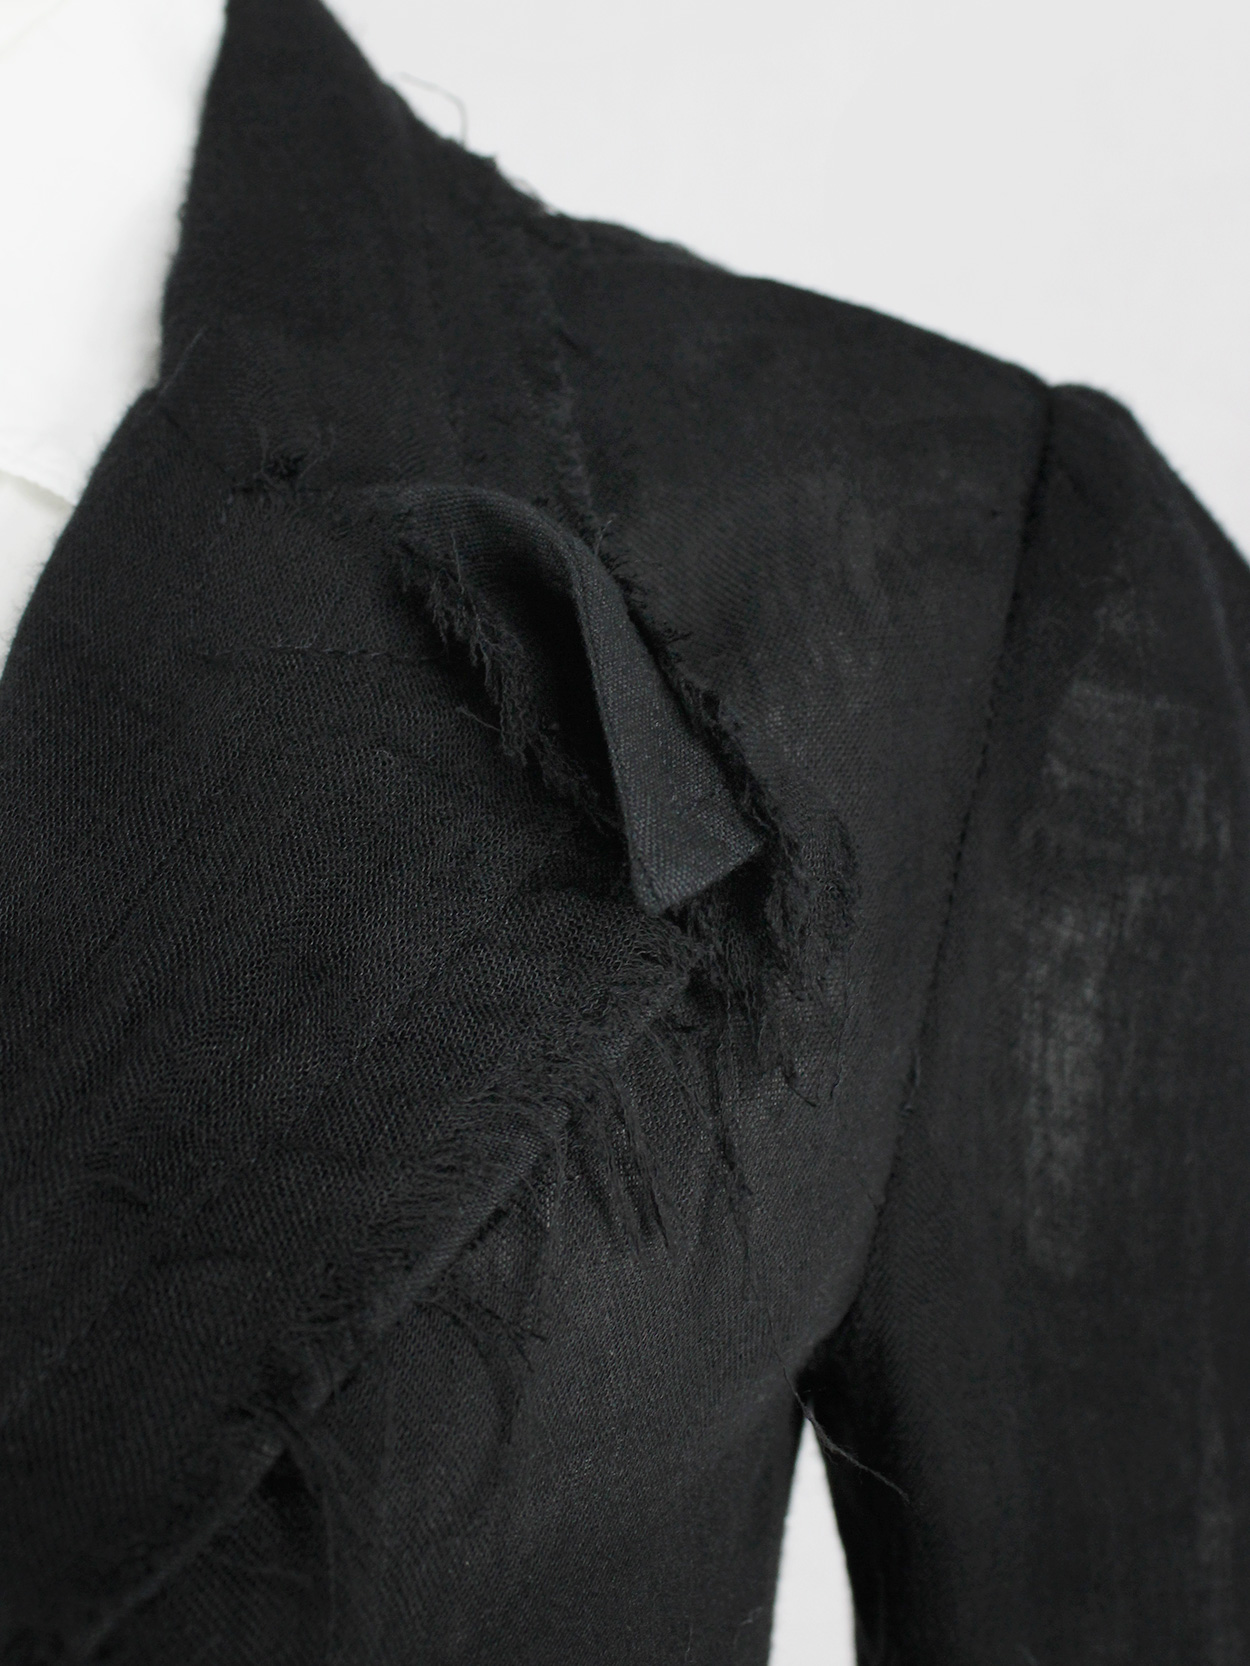 vaniitas Yohji Yamamoto long black asymmetric blazer with frayed finish 0535